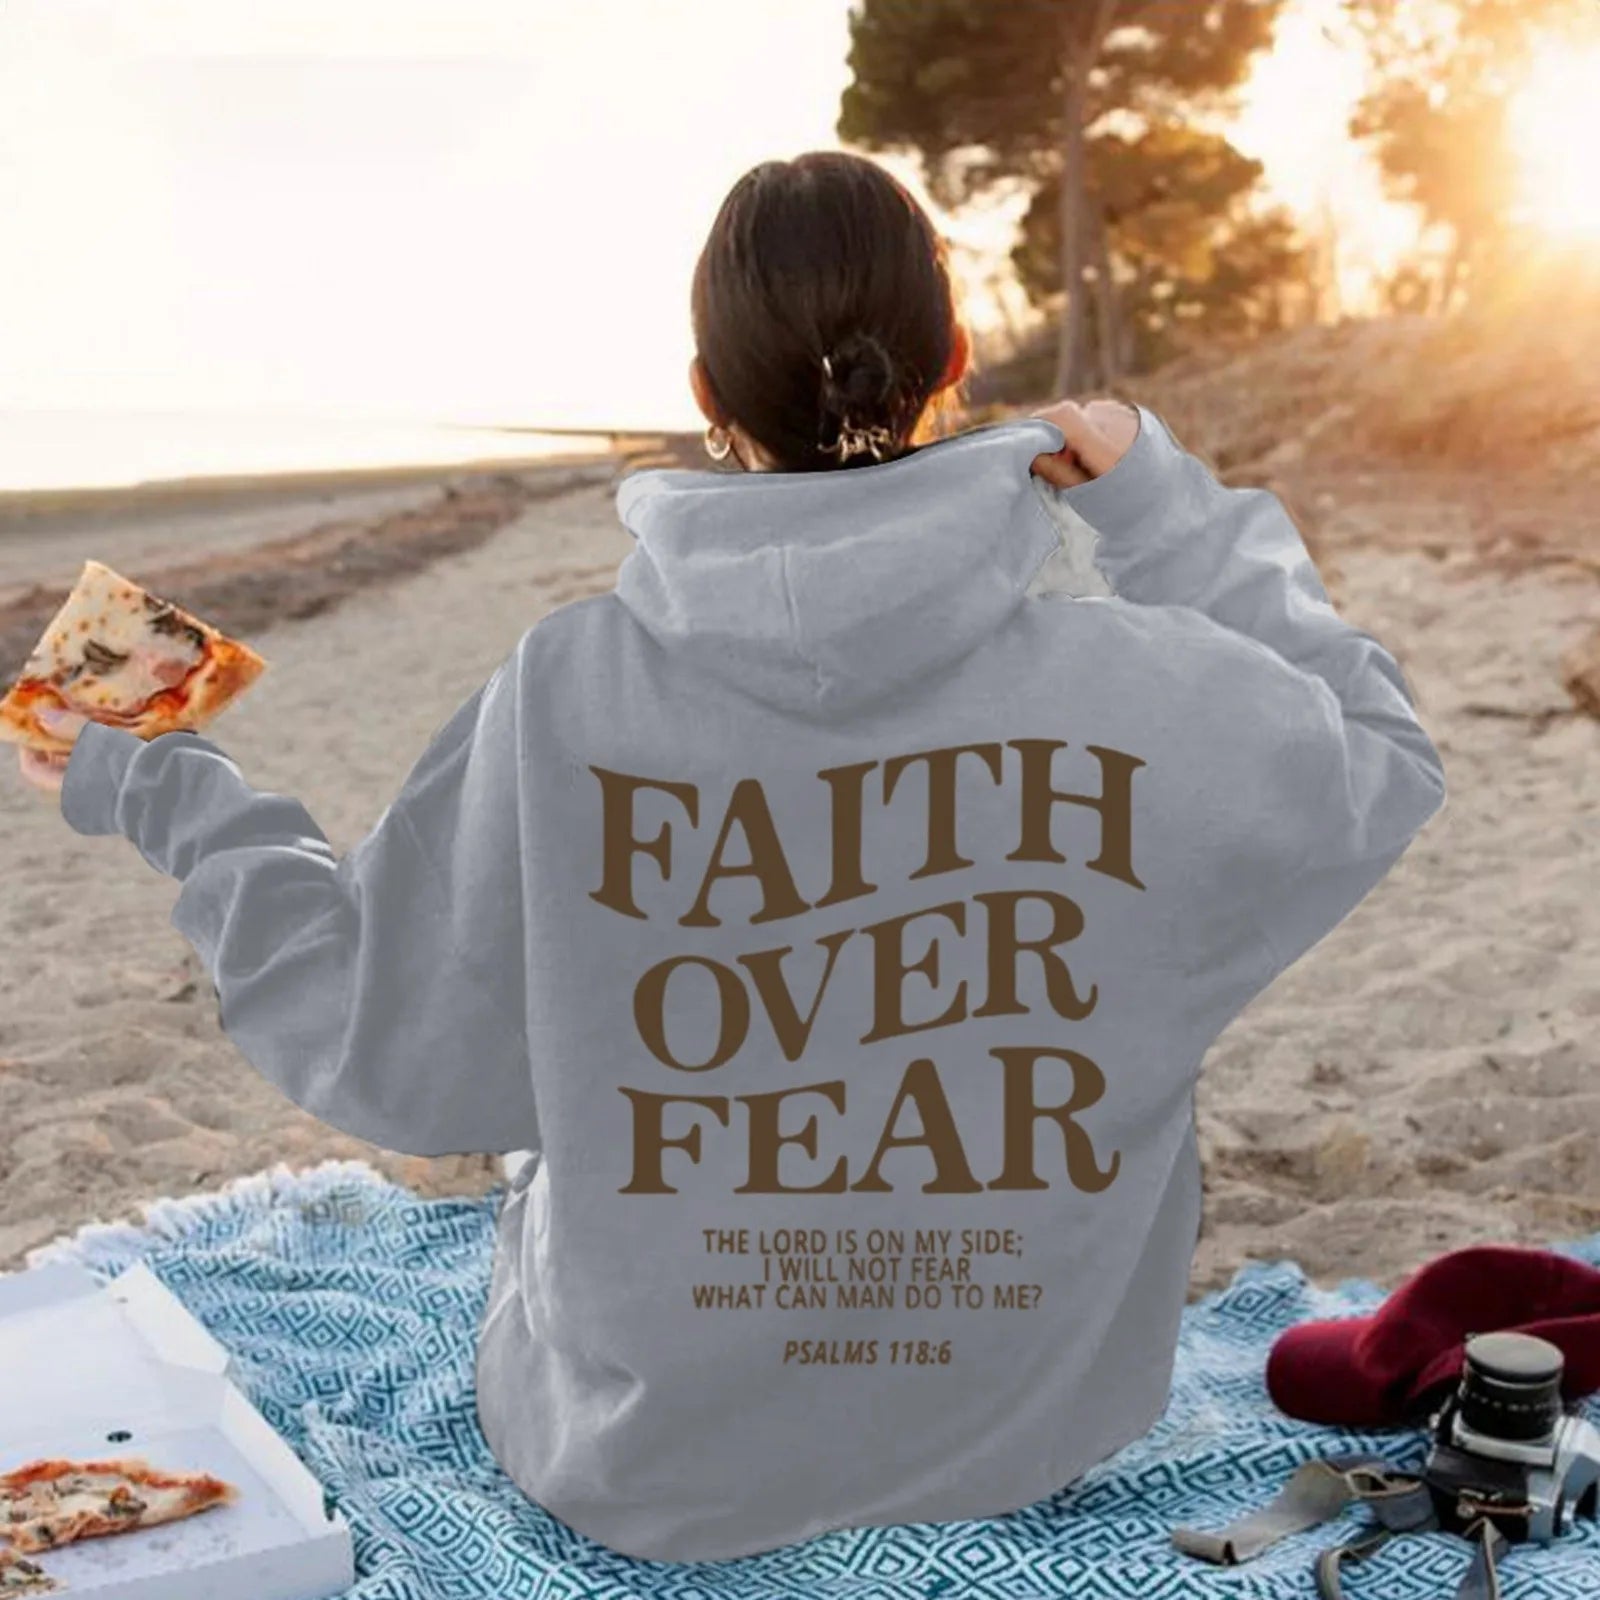 Faith Over Fear Oversized Women's Hoodie Sweatshirt: Trendy Graphic Hooded Sweatshirts for Autumn Casual Wear